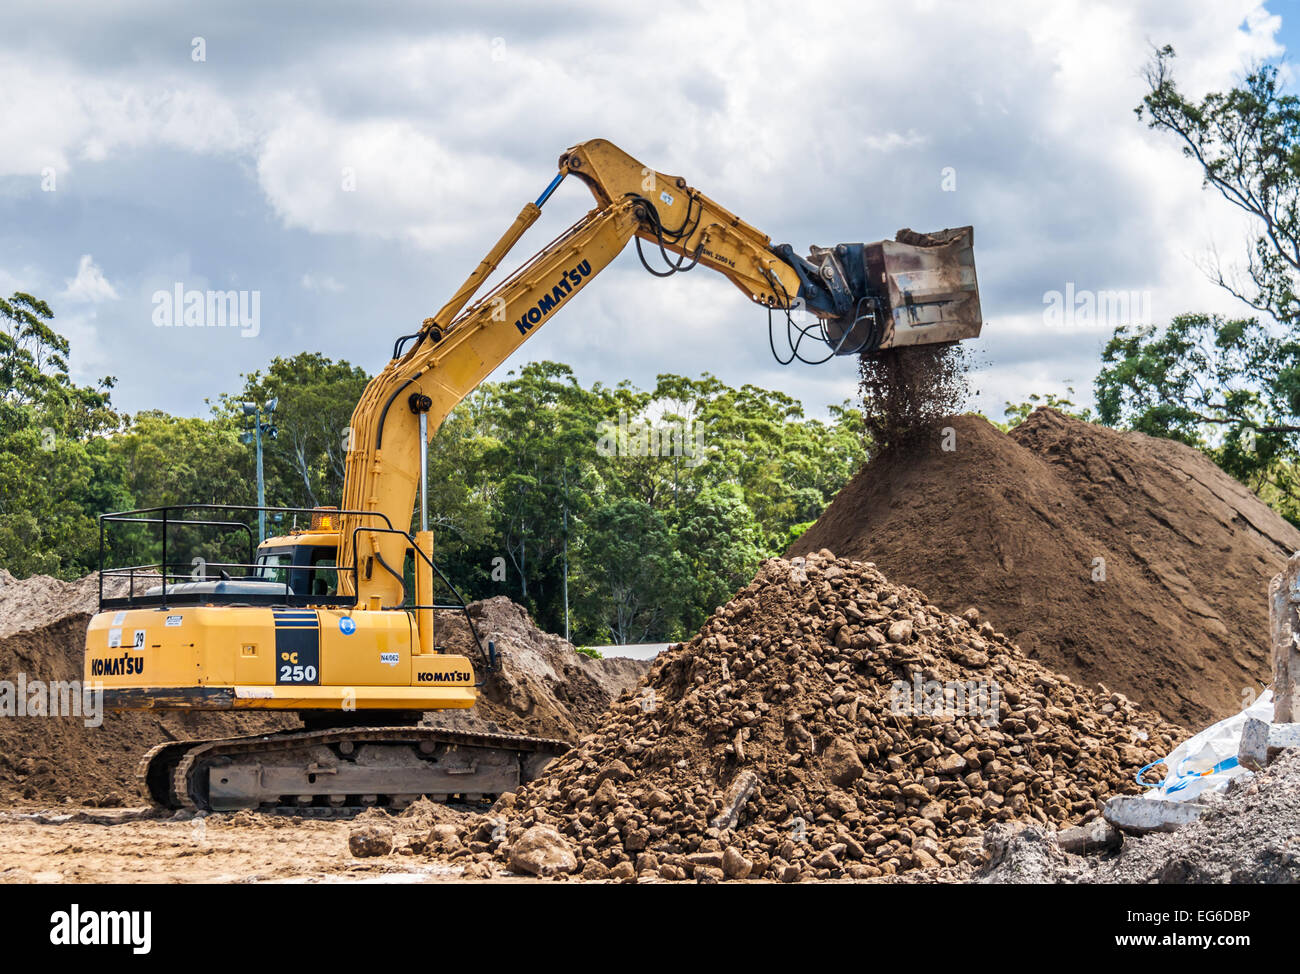 Komatsu earth moving machine sorting and sifting soil. Stock Photo